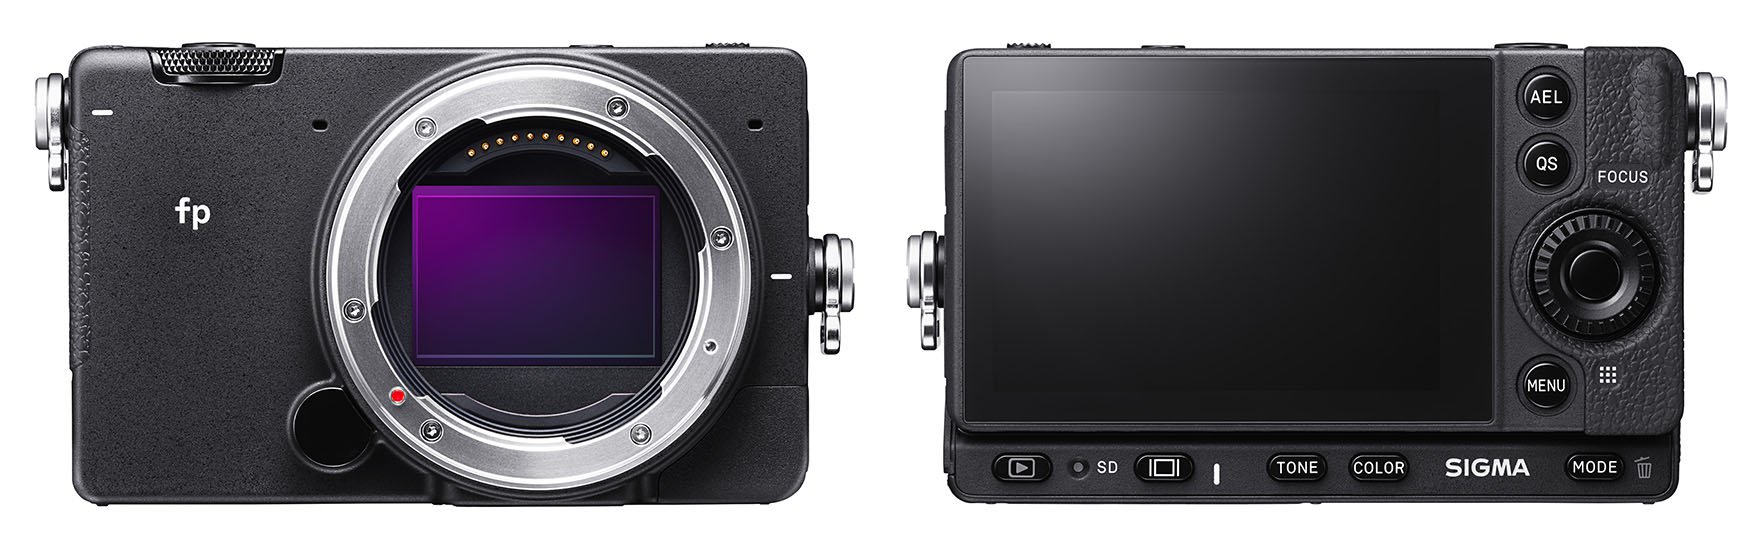 4714538_Sigma-fp-full-frame-mirrorless-camera-with-Leica-L-mount-1.jpg